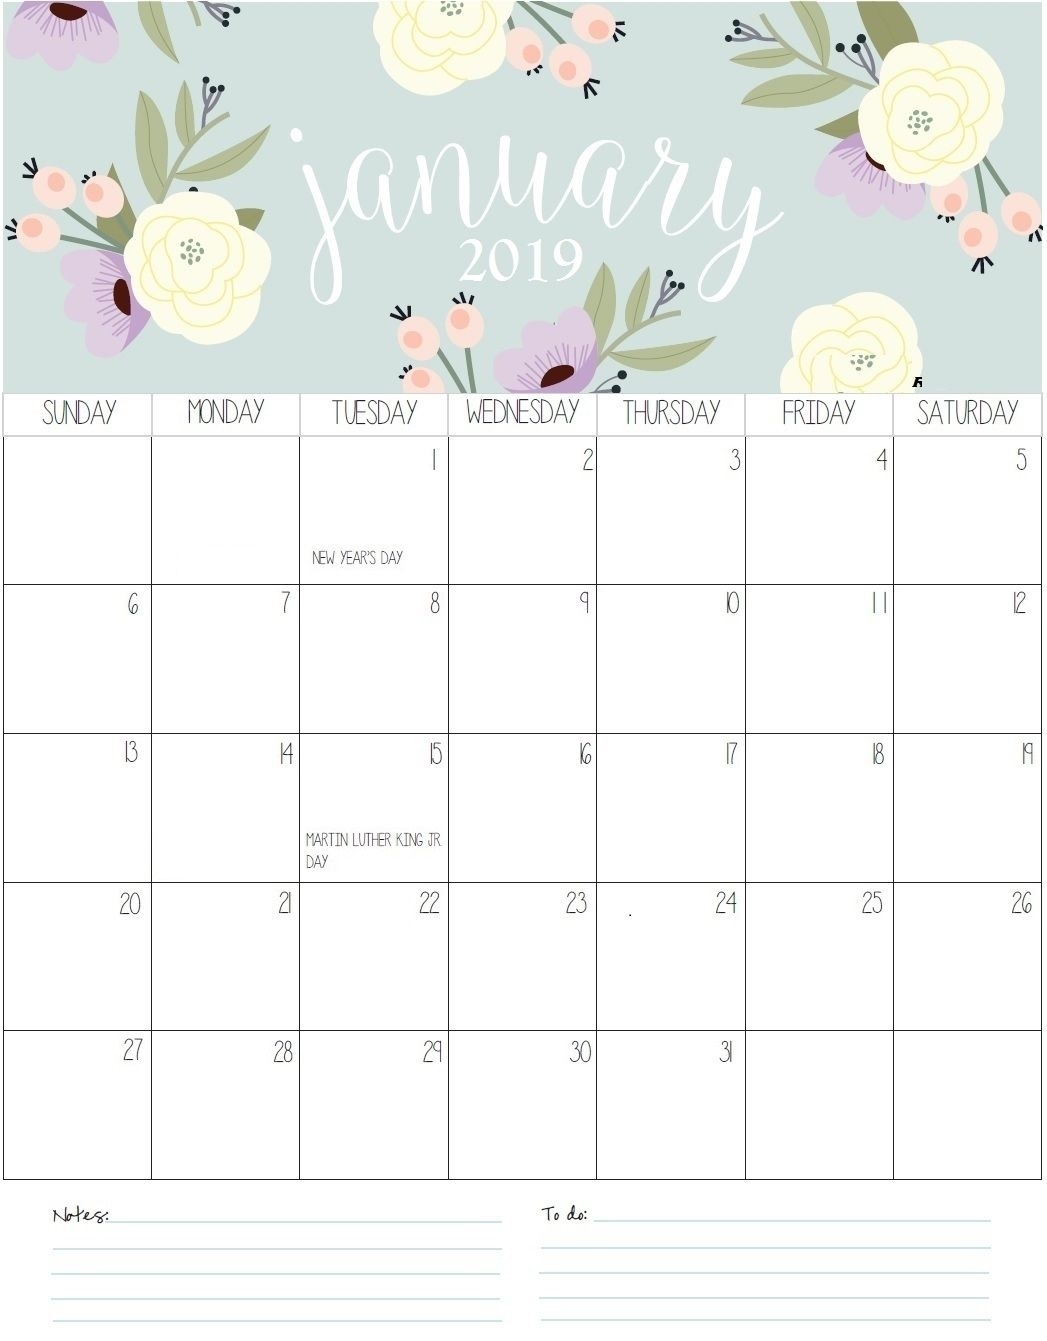 January 2019 Calendar January 2019 Iphone Calendar (With